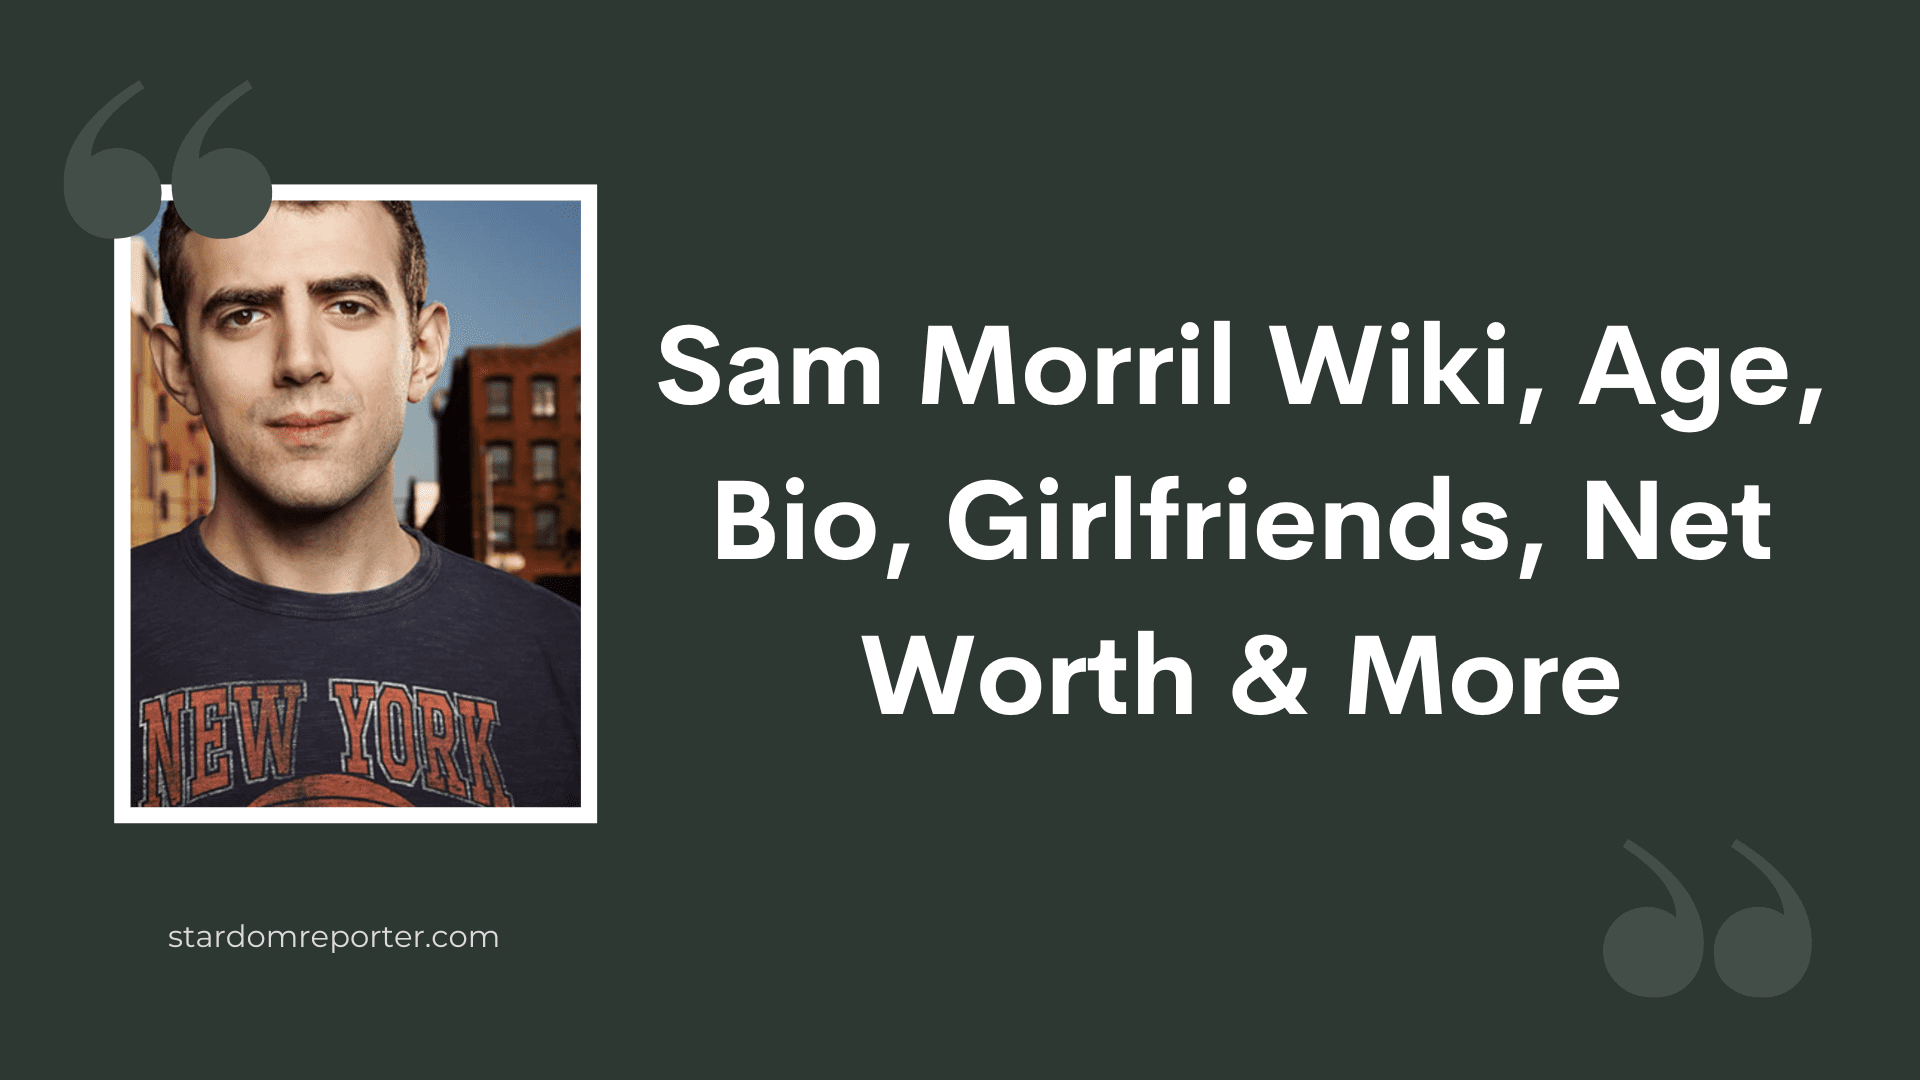 Sam Morril Wiki, Age, Bio, Girlfriends, Net Worth & More - 15